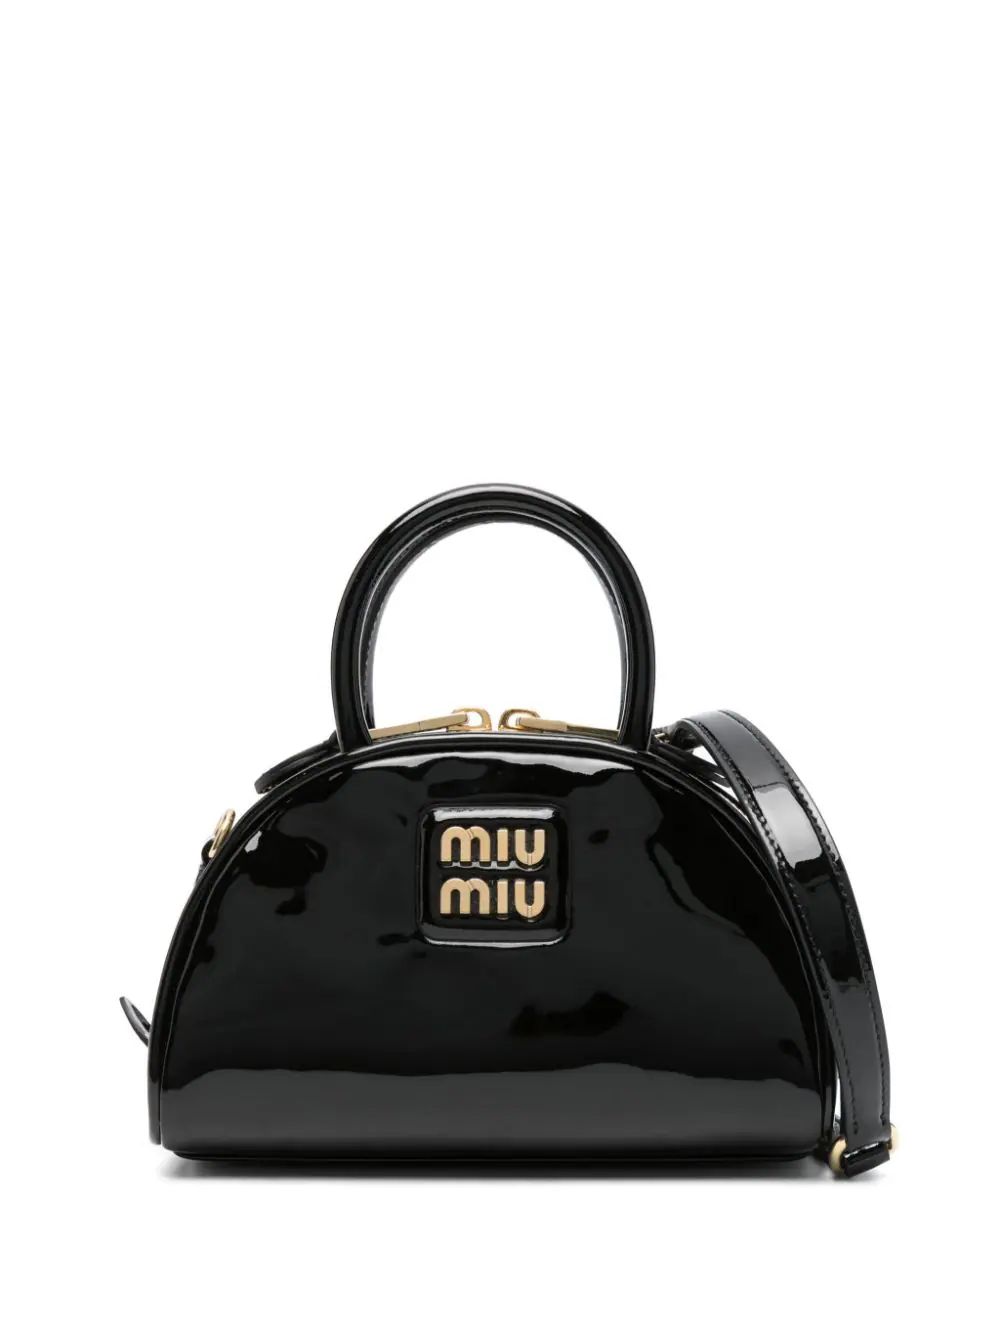 MIU MIU Women Vernice Miniborse Handbag